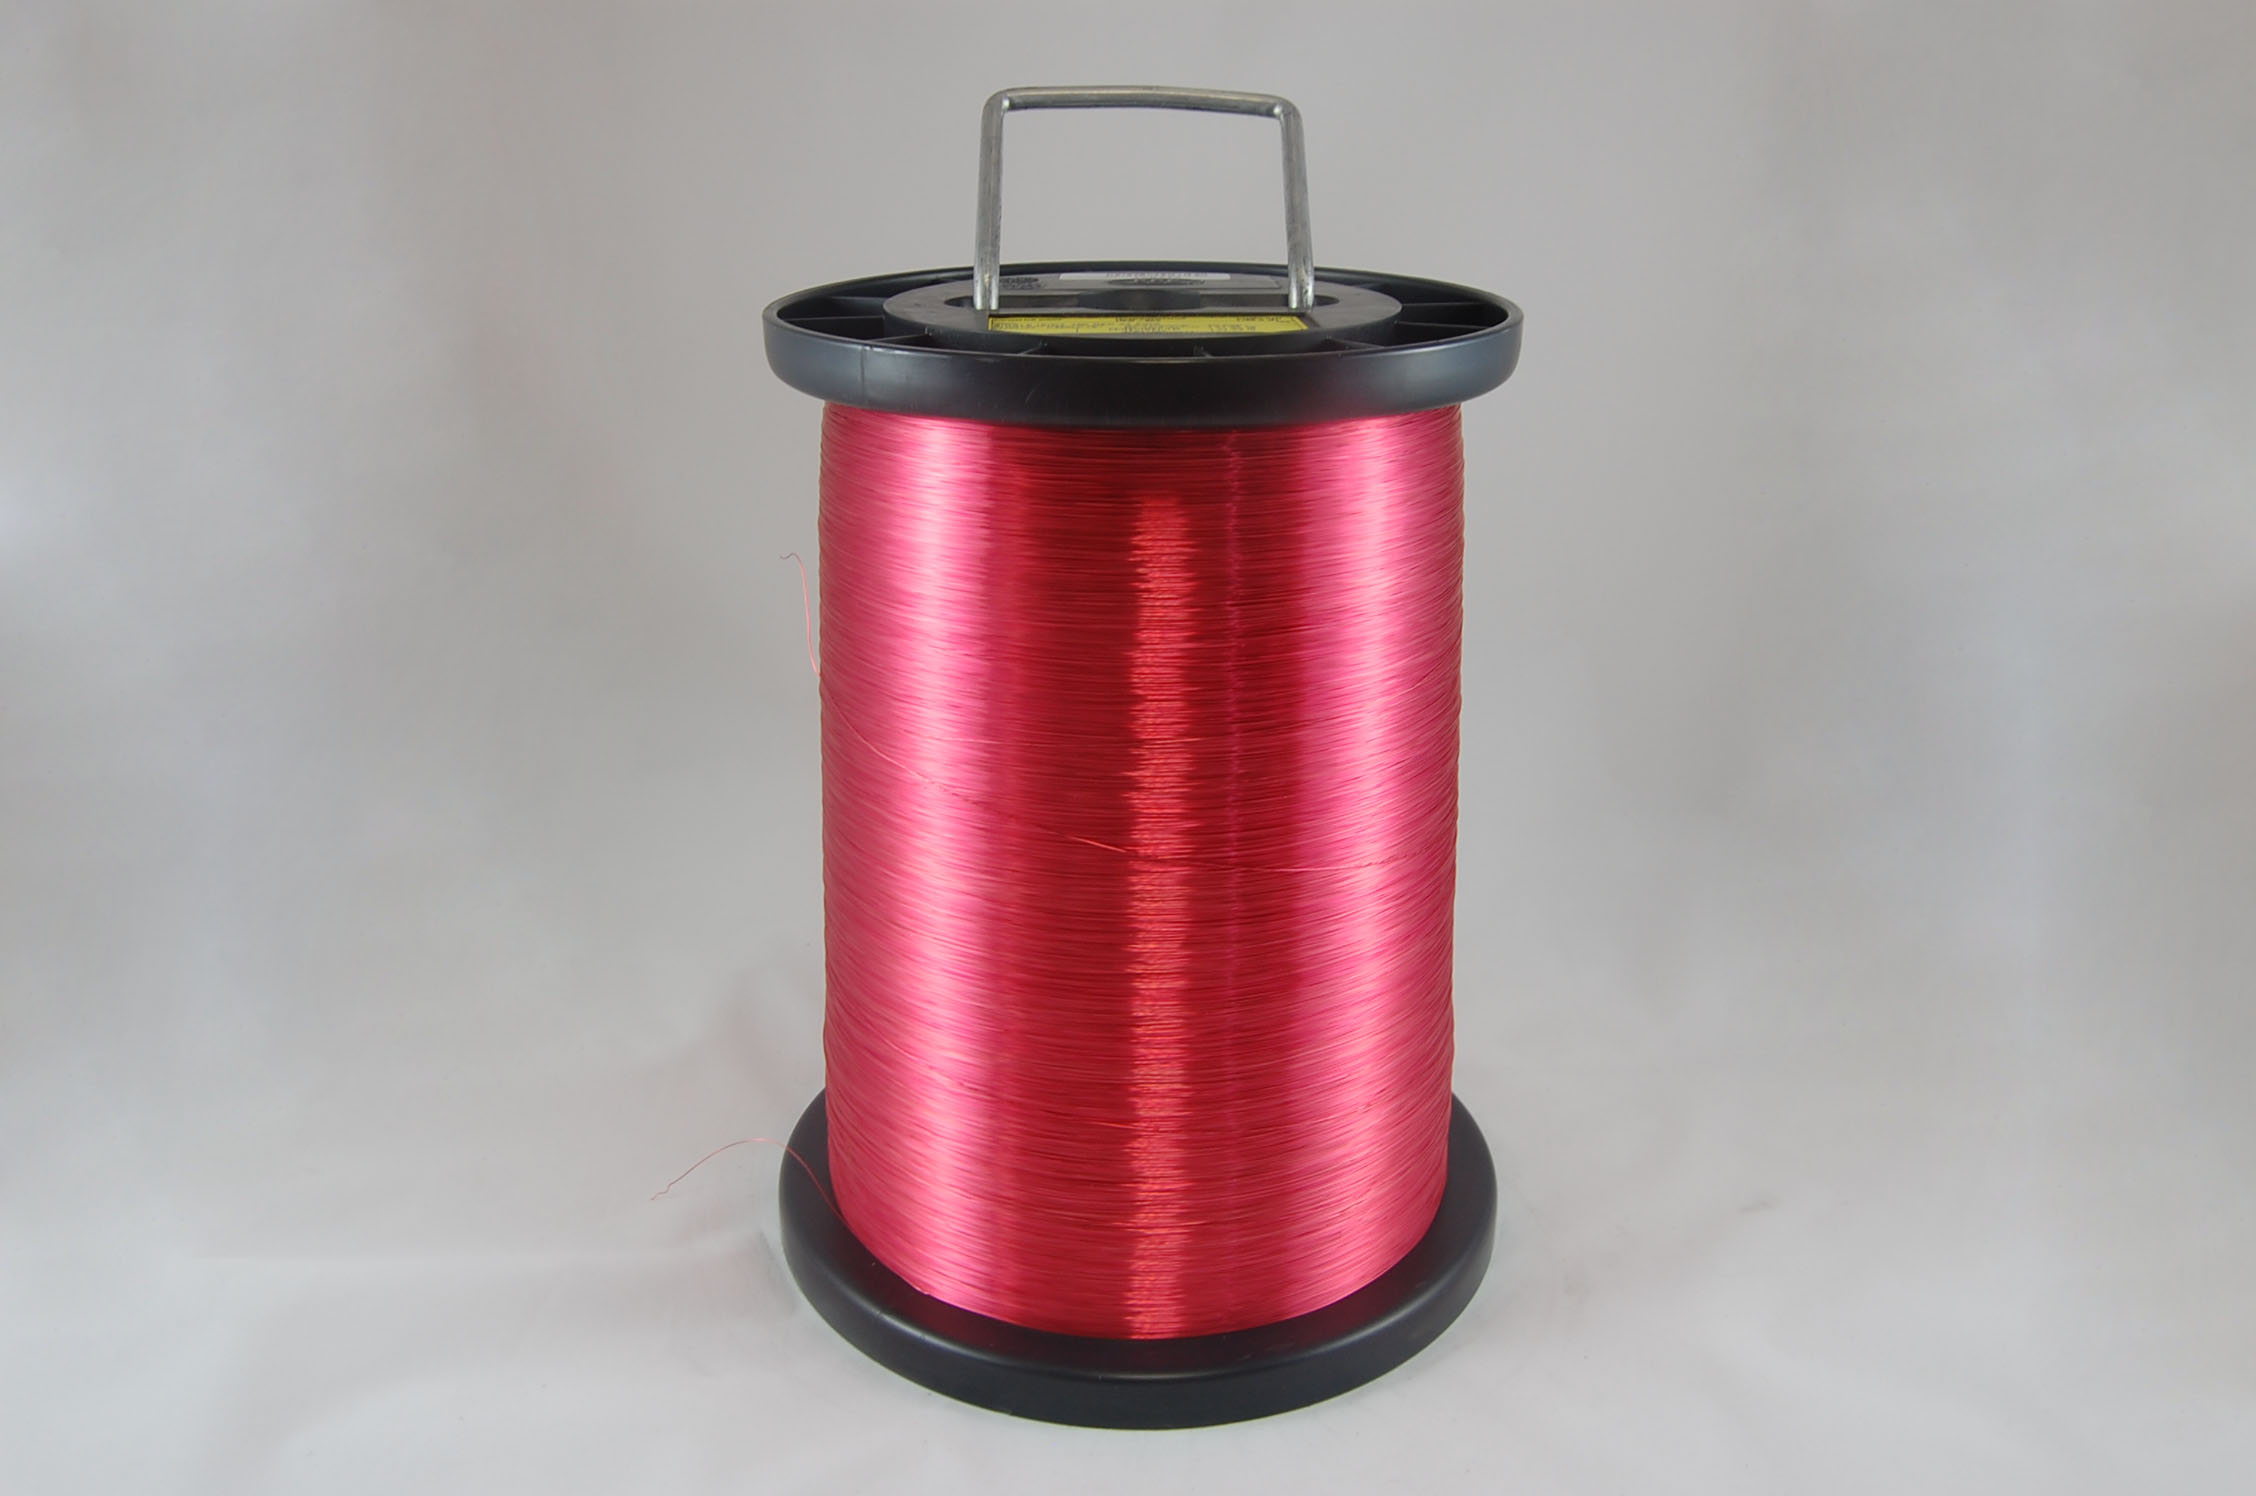 #15 Heavy INVEMID 200 Round MW 35 Copper Magnet Wire 200°C, copper, 45 LB half pack pail (average wght.)